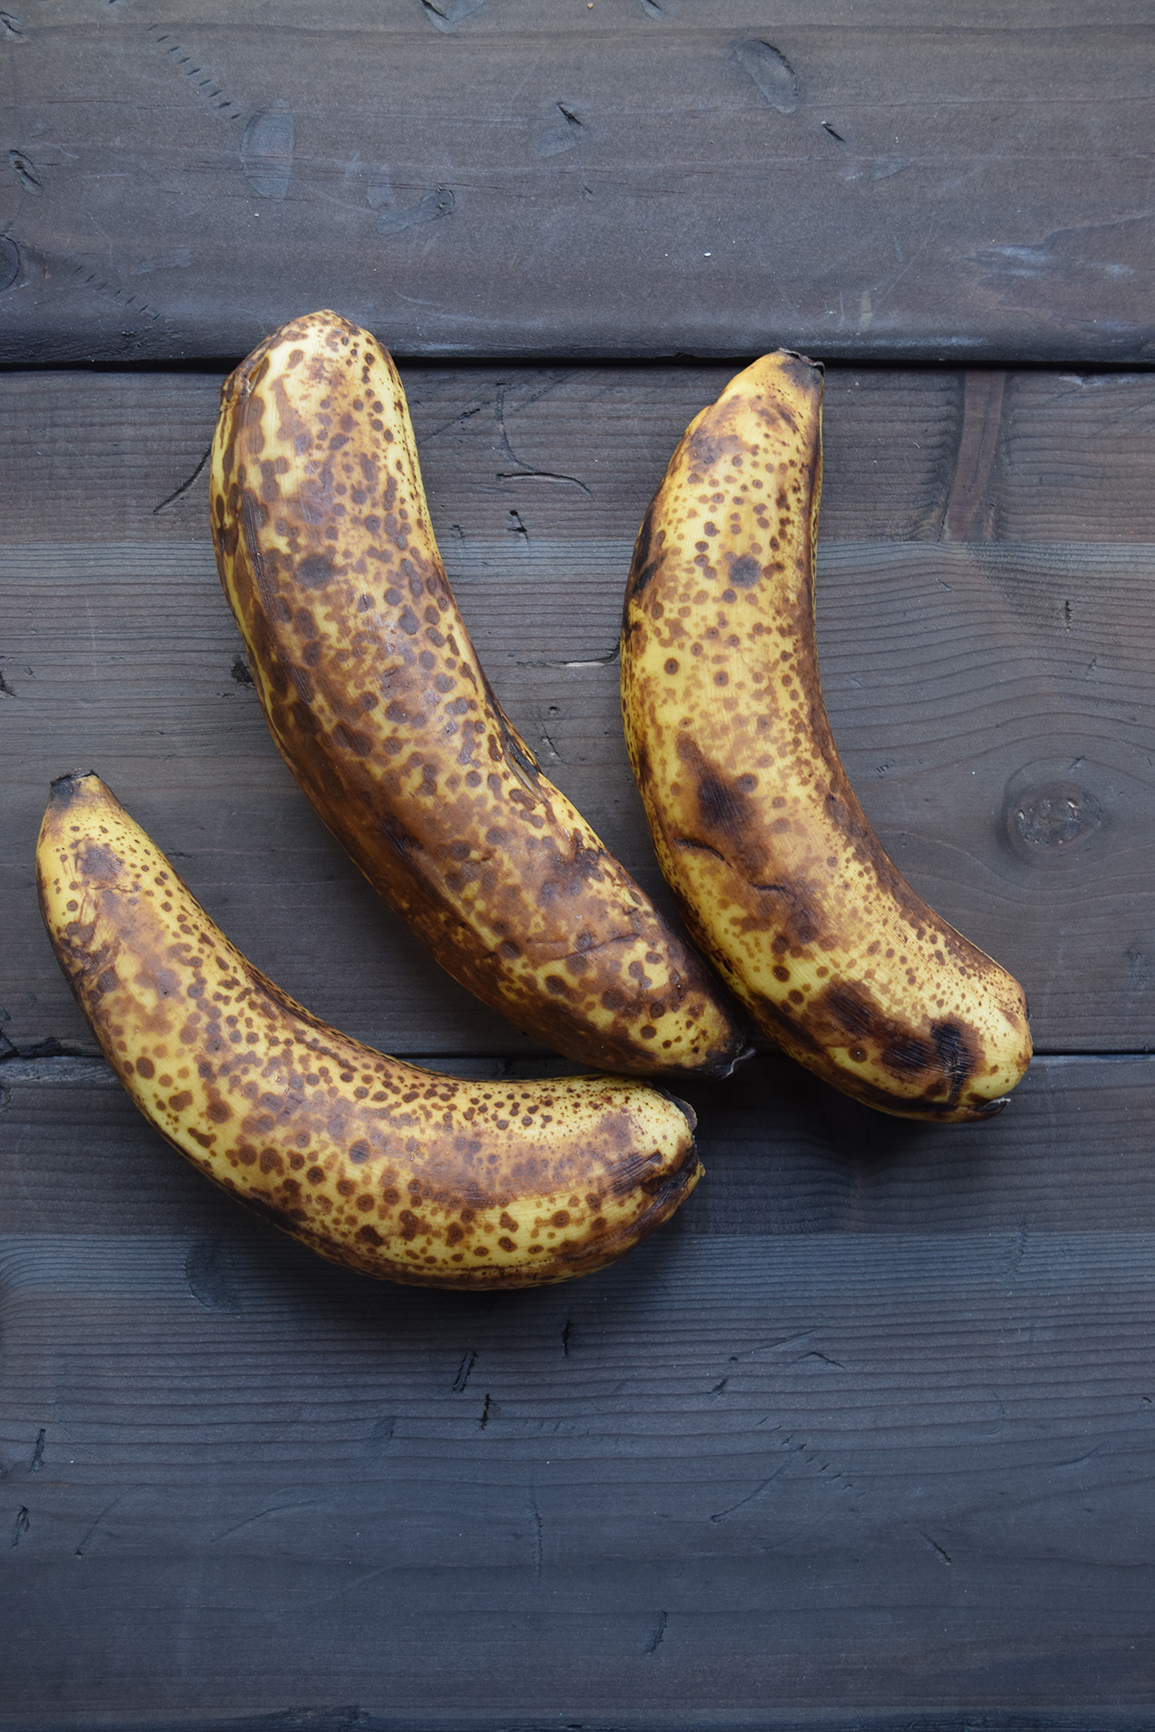 The Best Vegan Banana Bread Recipe | Shane & Simple